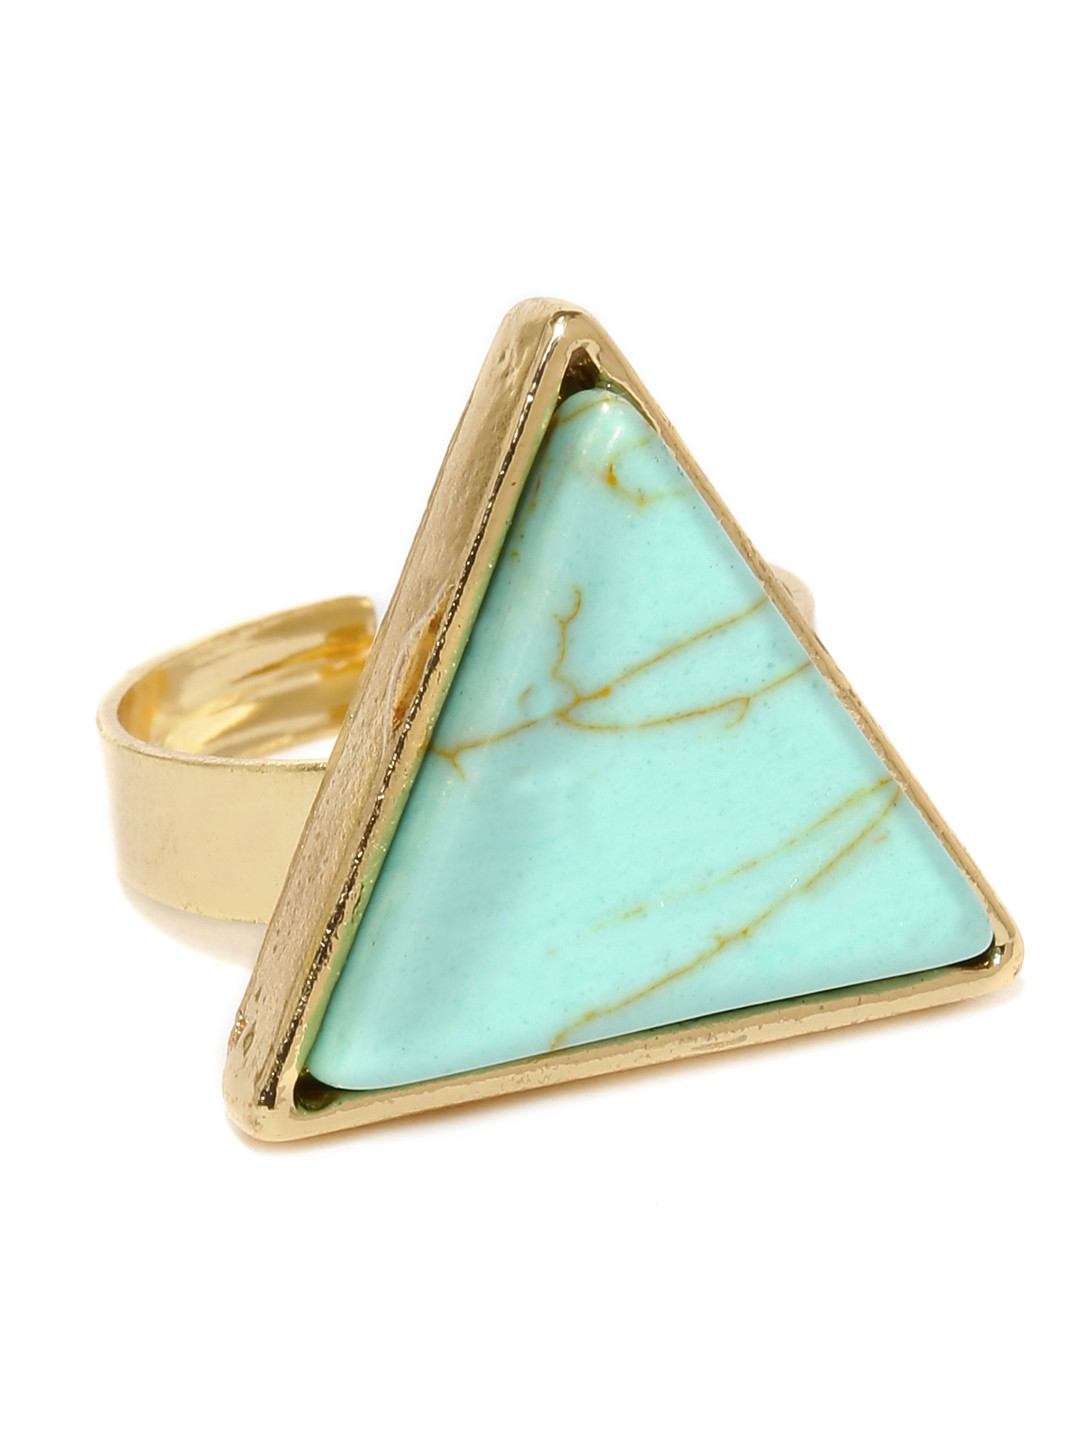 ToniQ Gold-Toned & Blue Triangular Ring